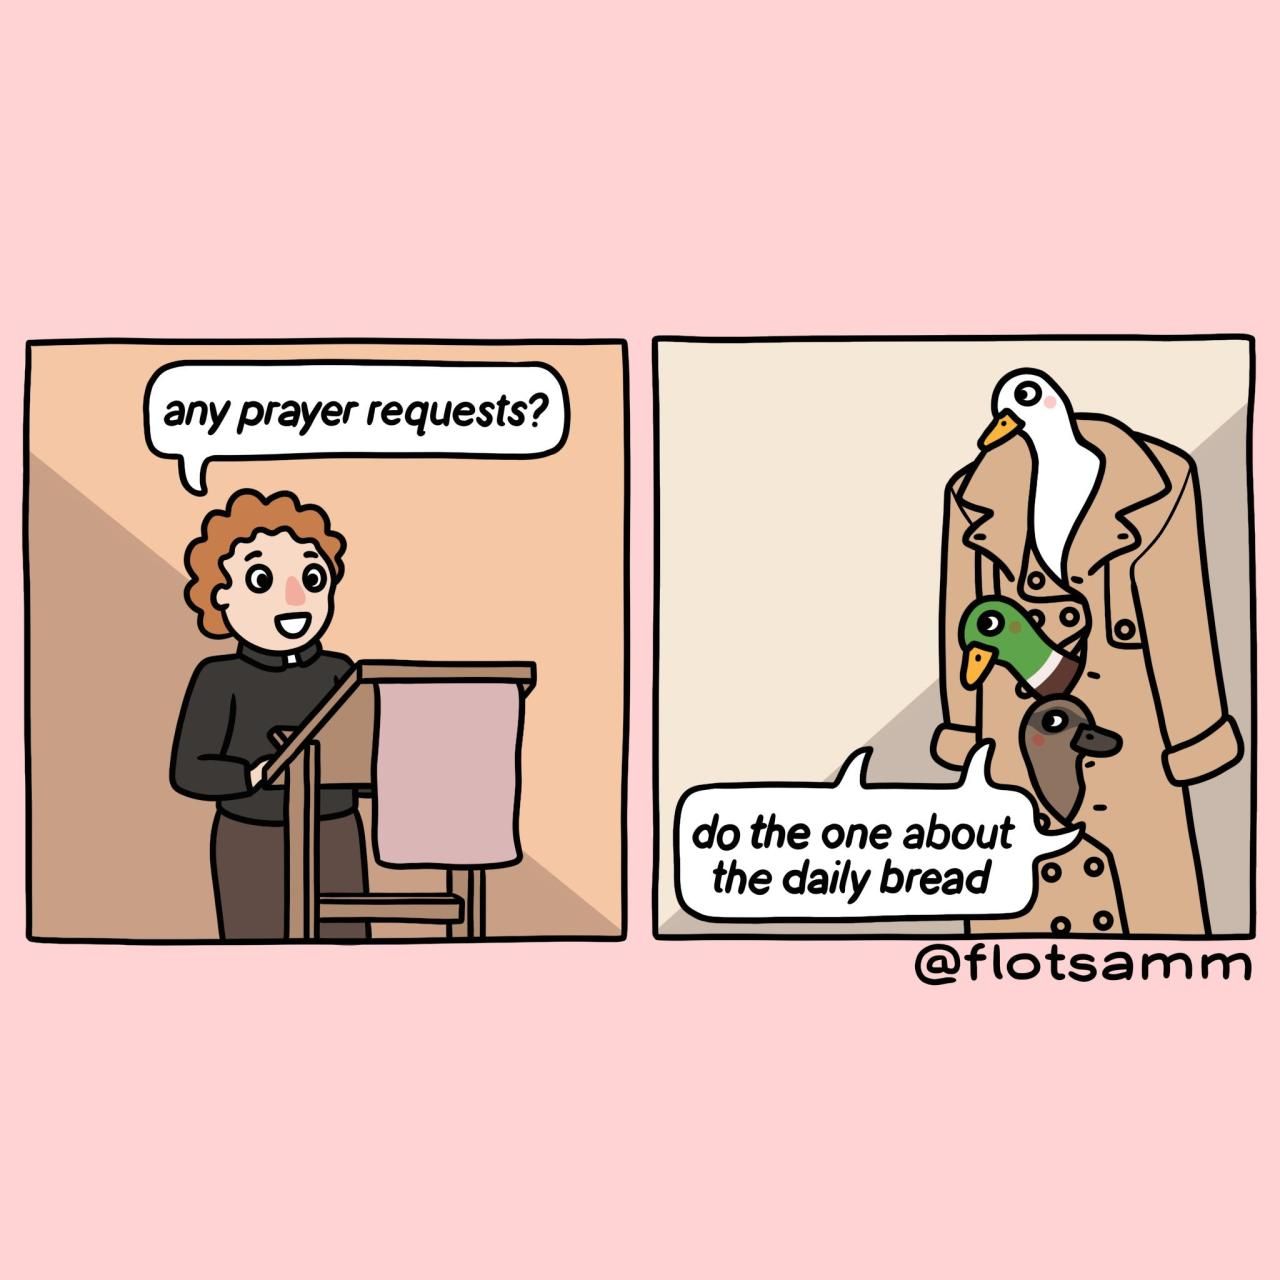 Their favorite prayer